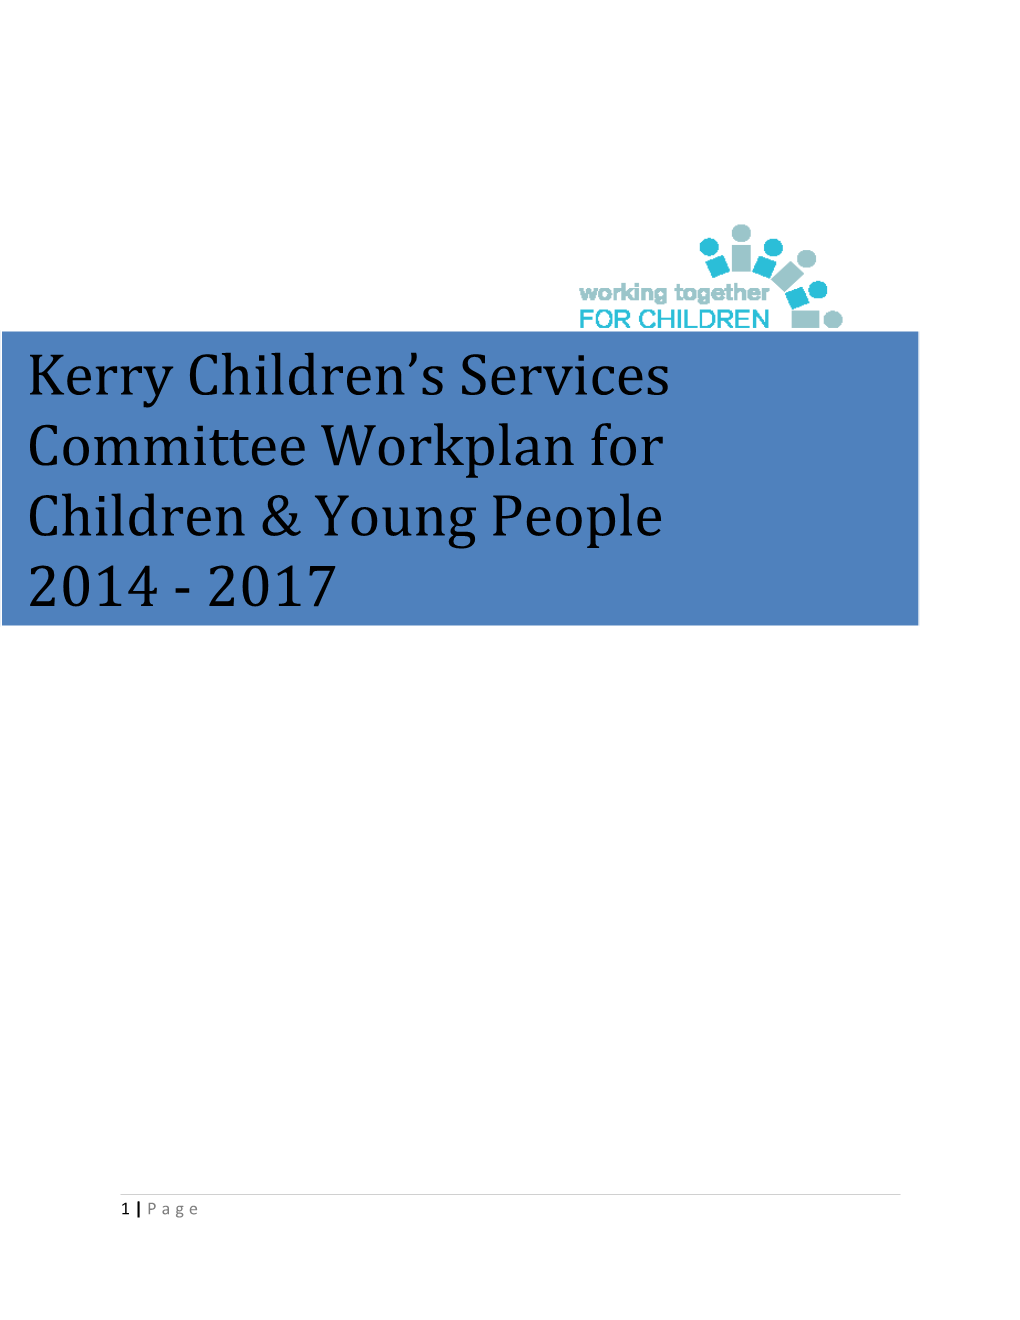 Kerry Children S Services Committee Workplan 2014-2016